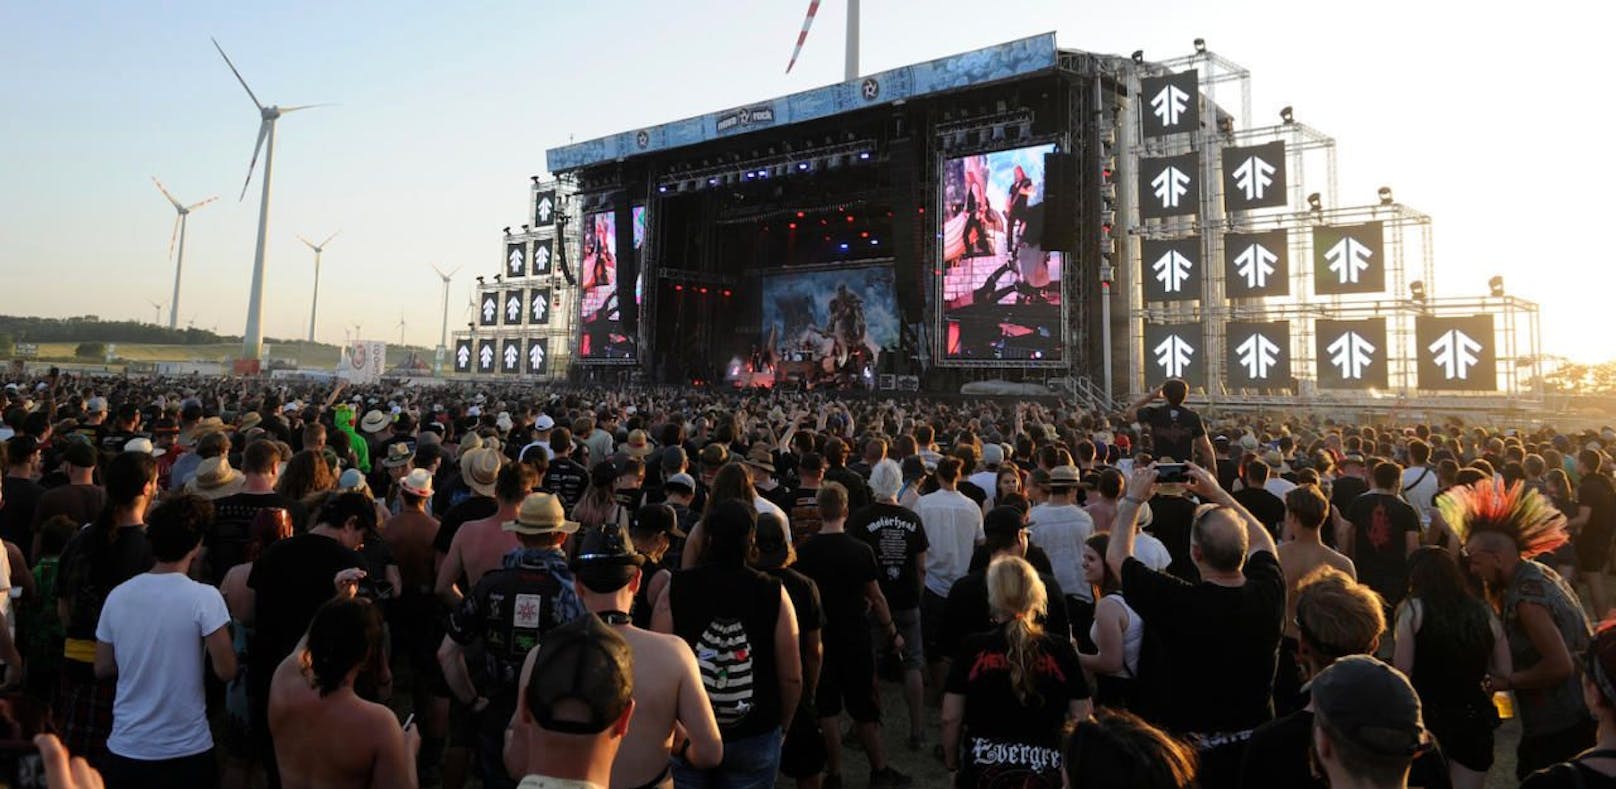 Nova Rock-Festival: Laut Veranstalter feierten heuer rund 220.000 Fans.